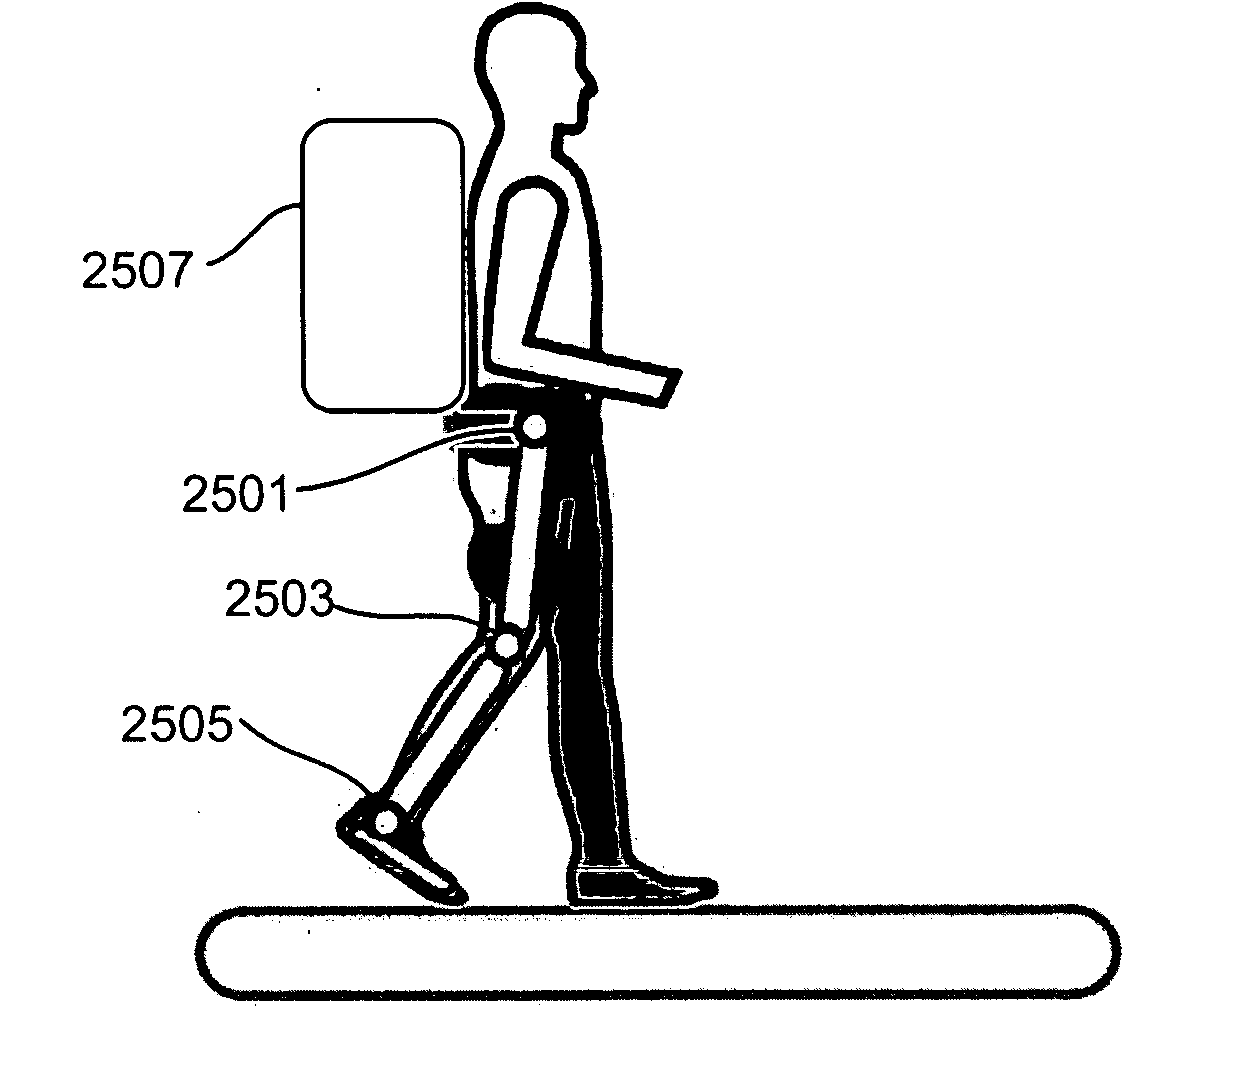 Exoskeletons for running and walking